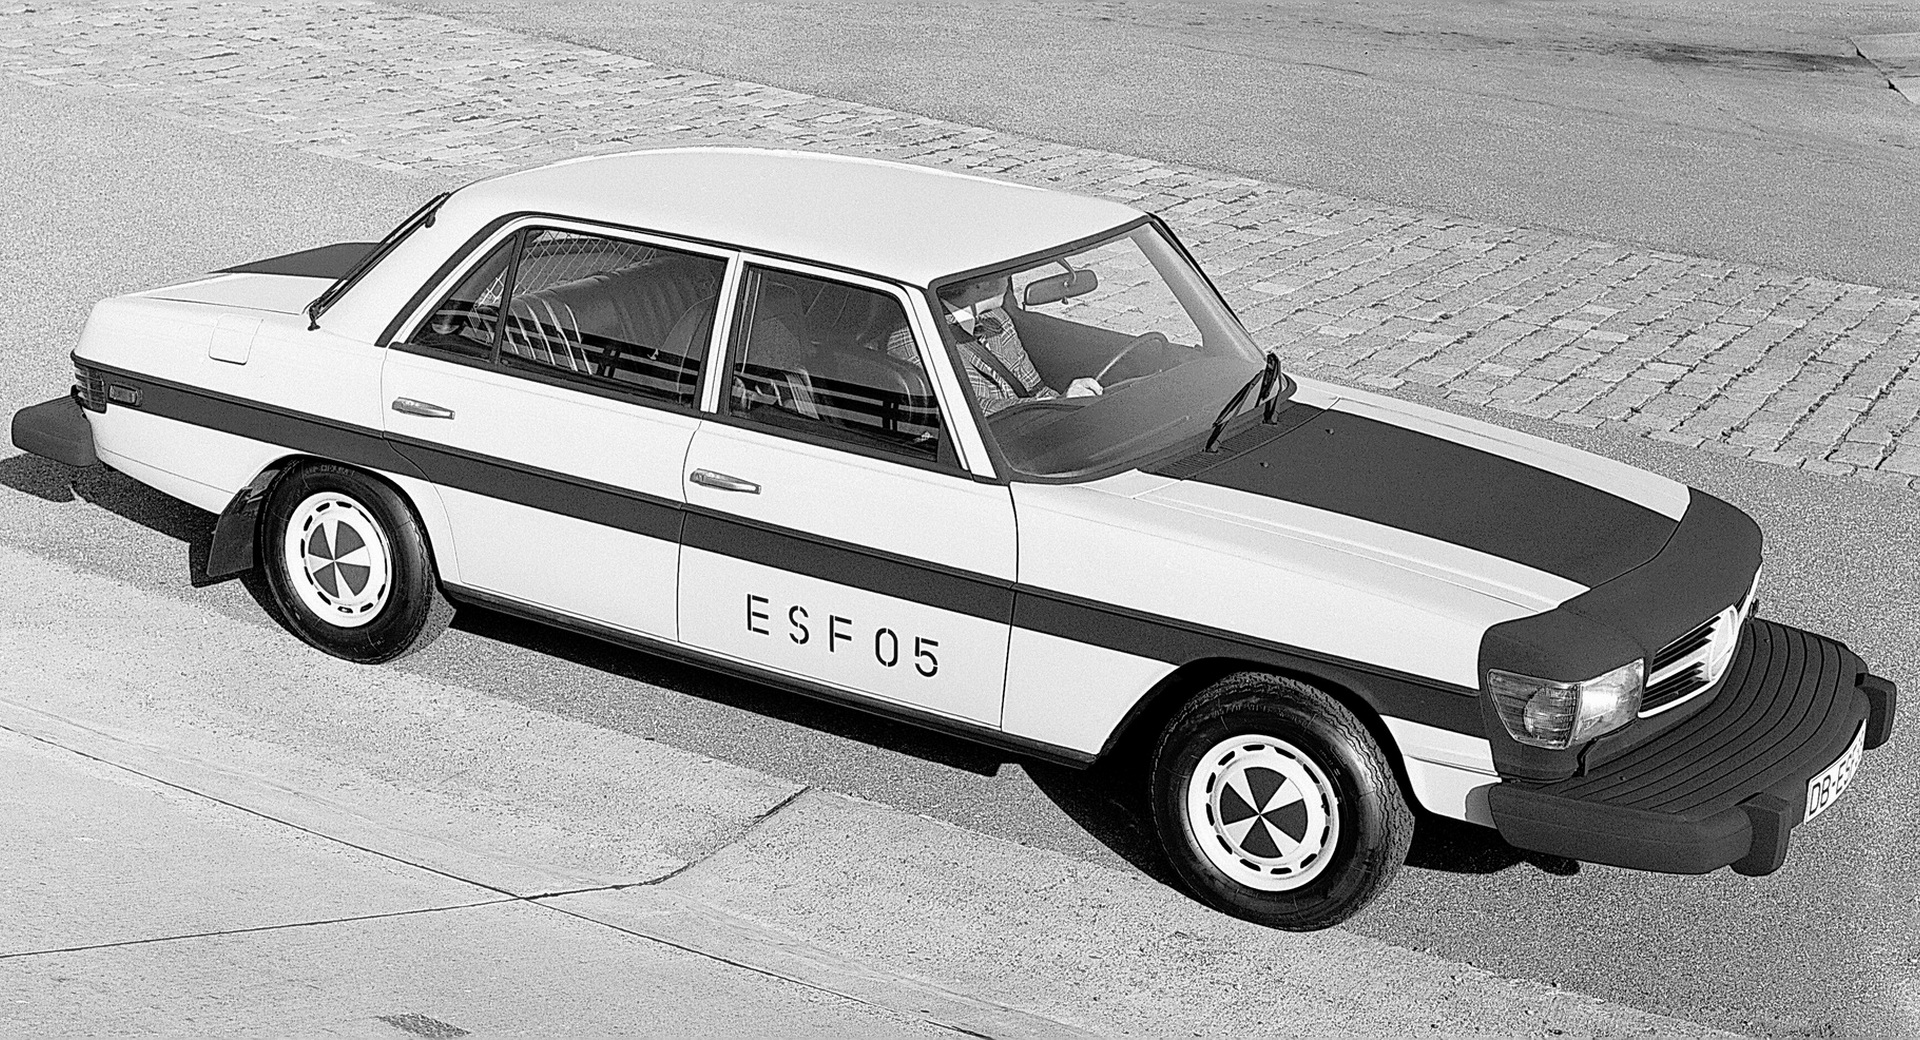 1971 Mercedes Esf 05 1